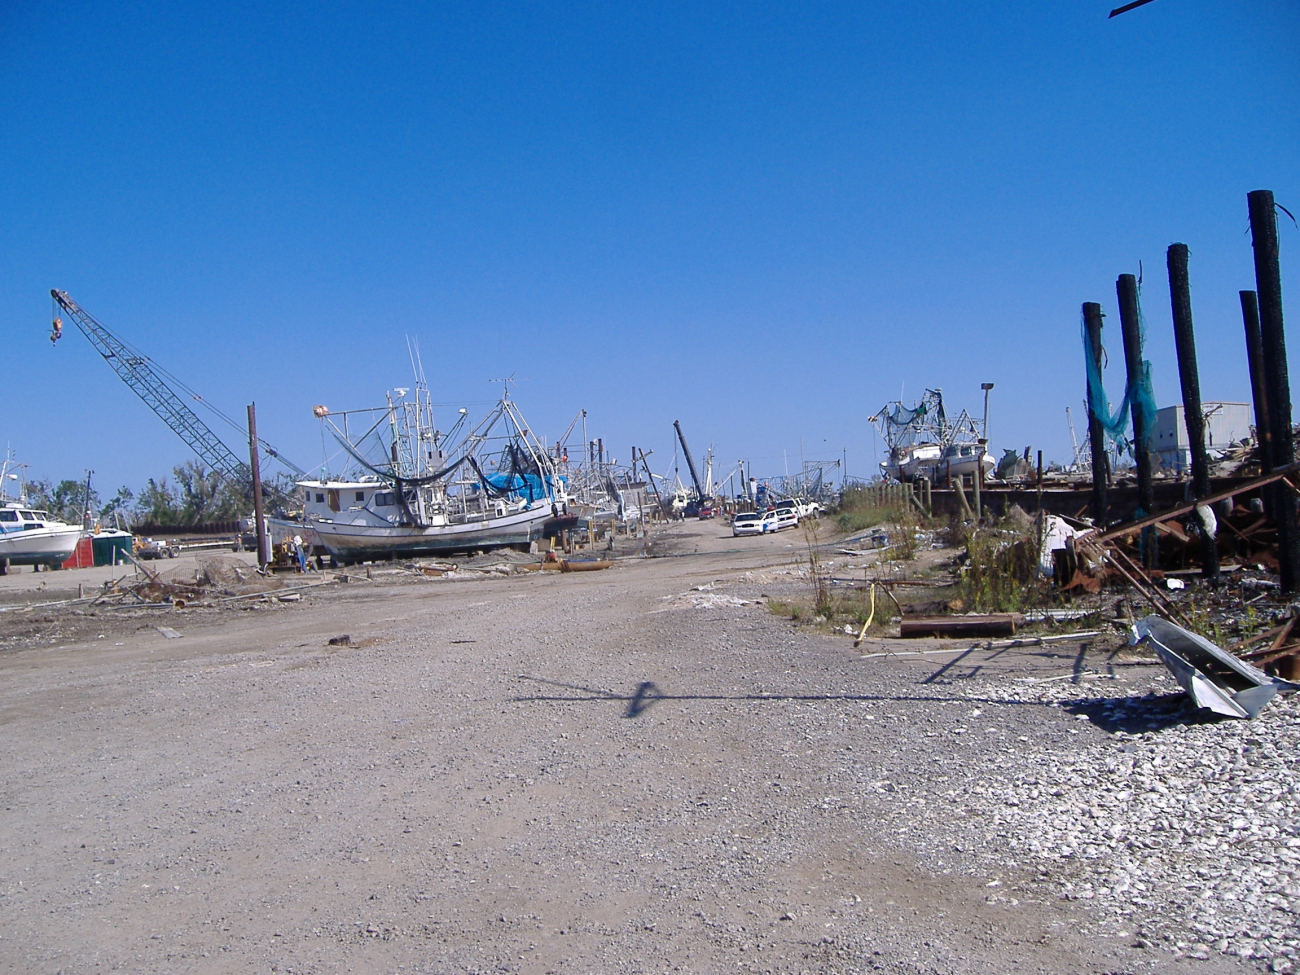 The aftermath of Katrina